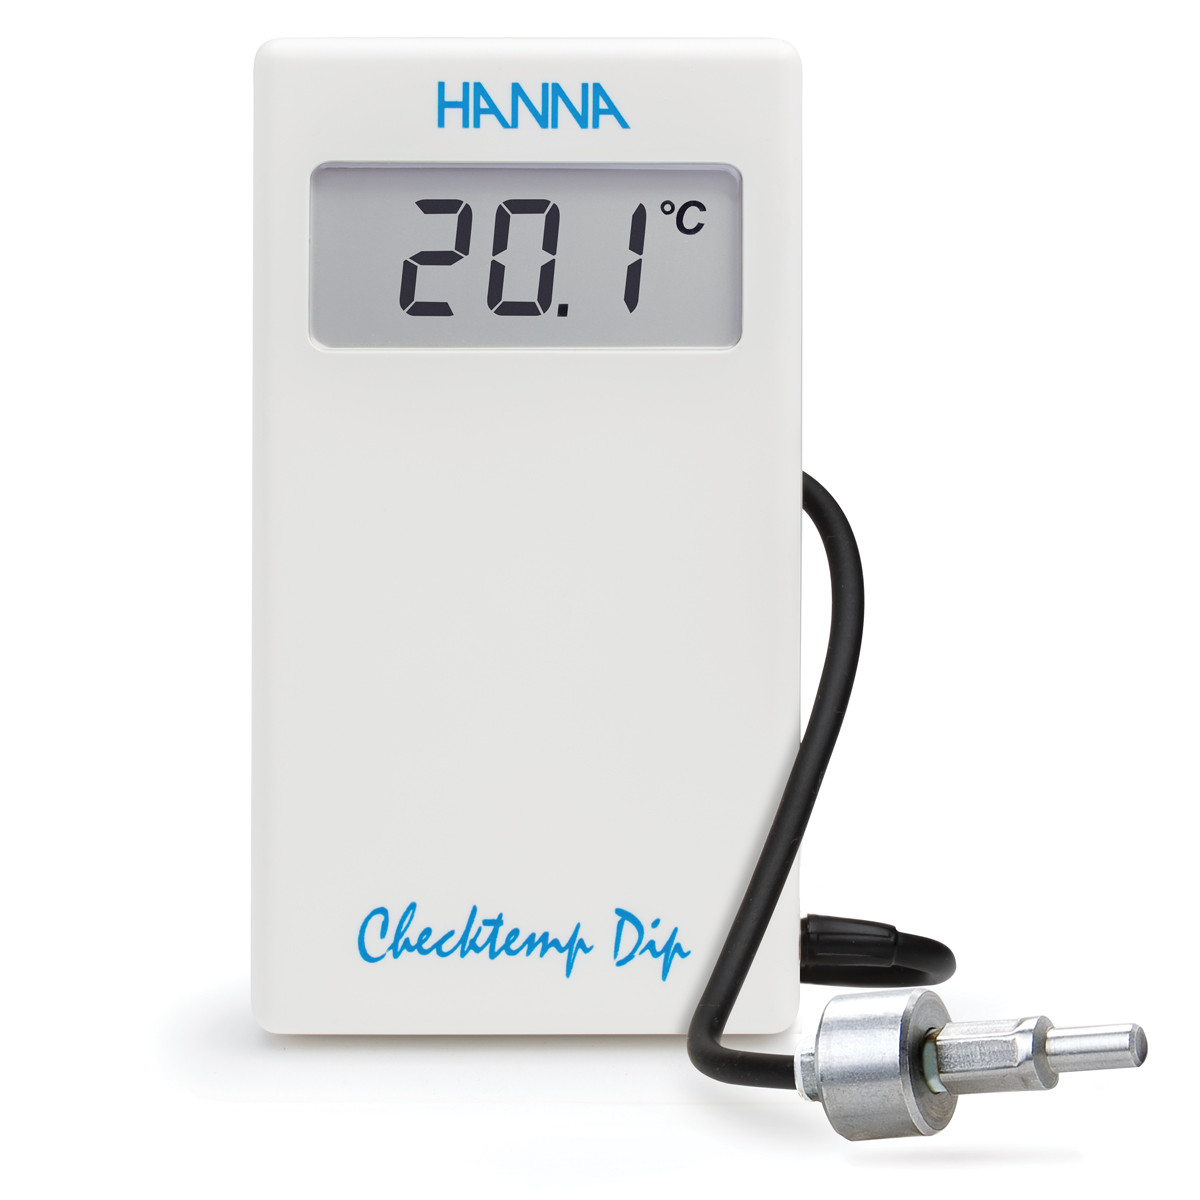 Checktemp® Dip Digital Thermometer